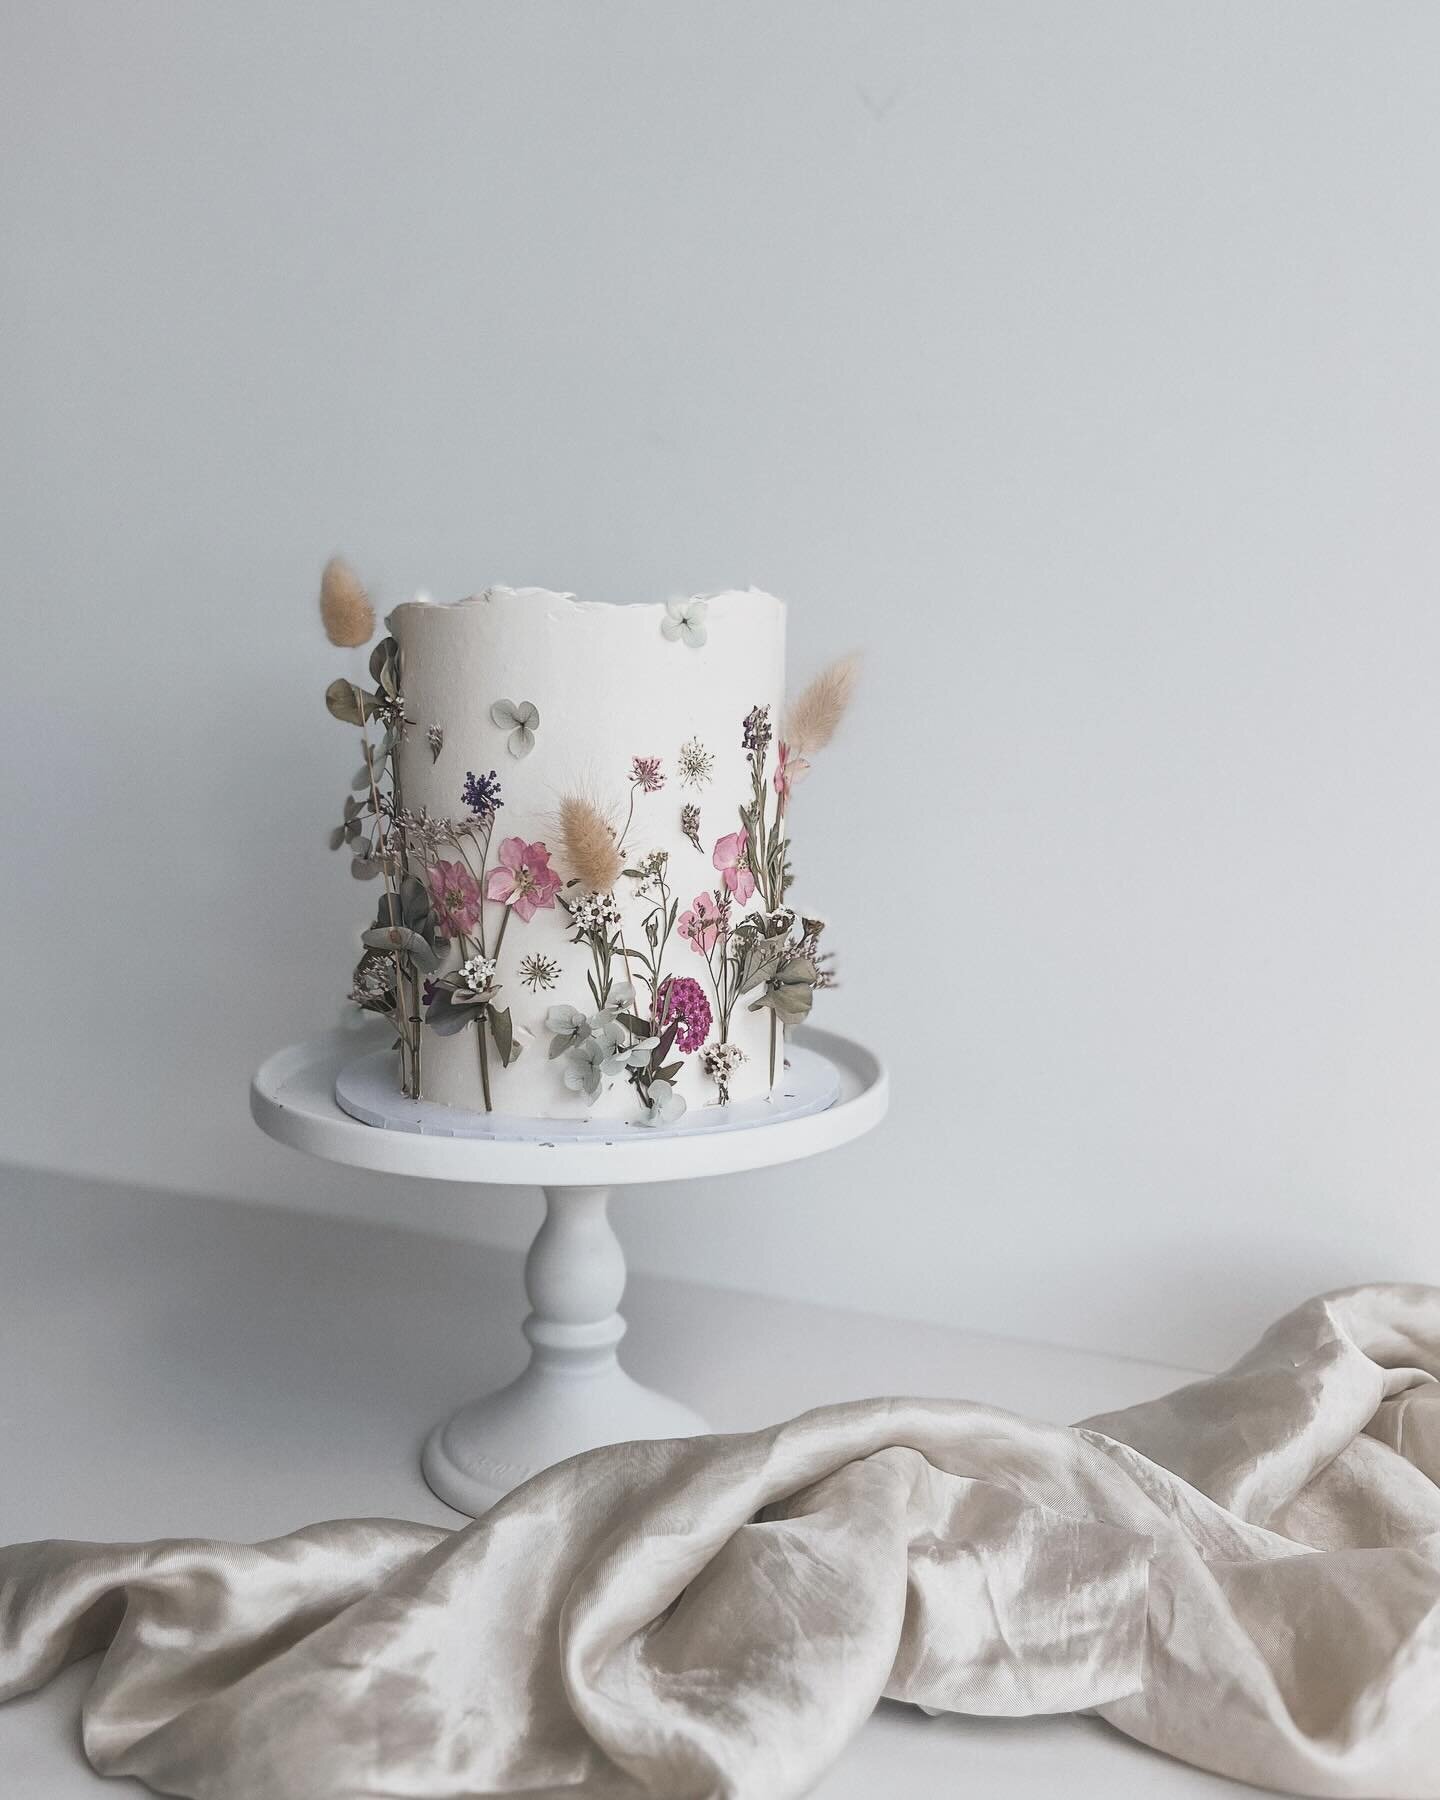 Totally adored this little pressed flower garden cake, made for my incredible florist @shiquefloraldesign 🤍

weddingcake #blooooms #forflowerlovers
#cake #thelane #weddedwonderland #modernwedding #cakedecorating #cakedesign #whimsicalcake #psimadeth